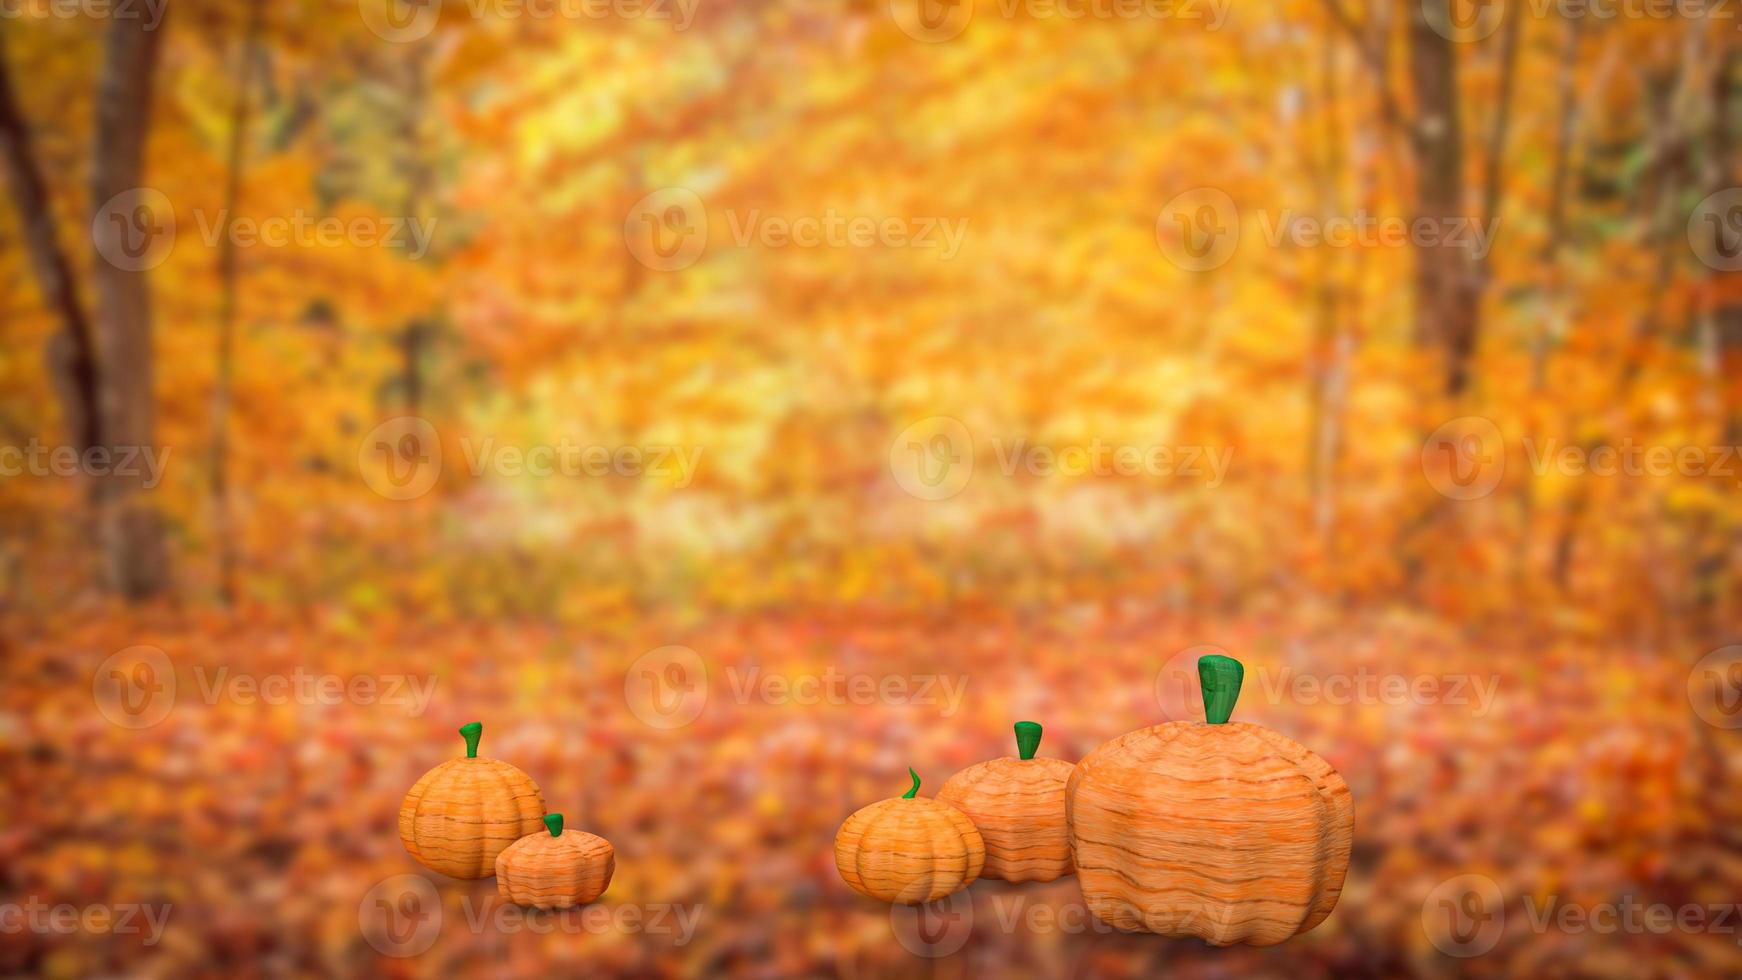 pumpkin in autumn season for thanksgiving concept 3d rendering photo